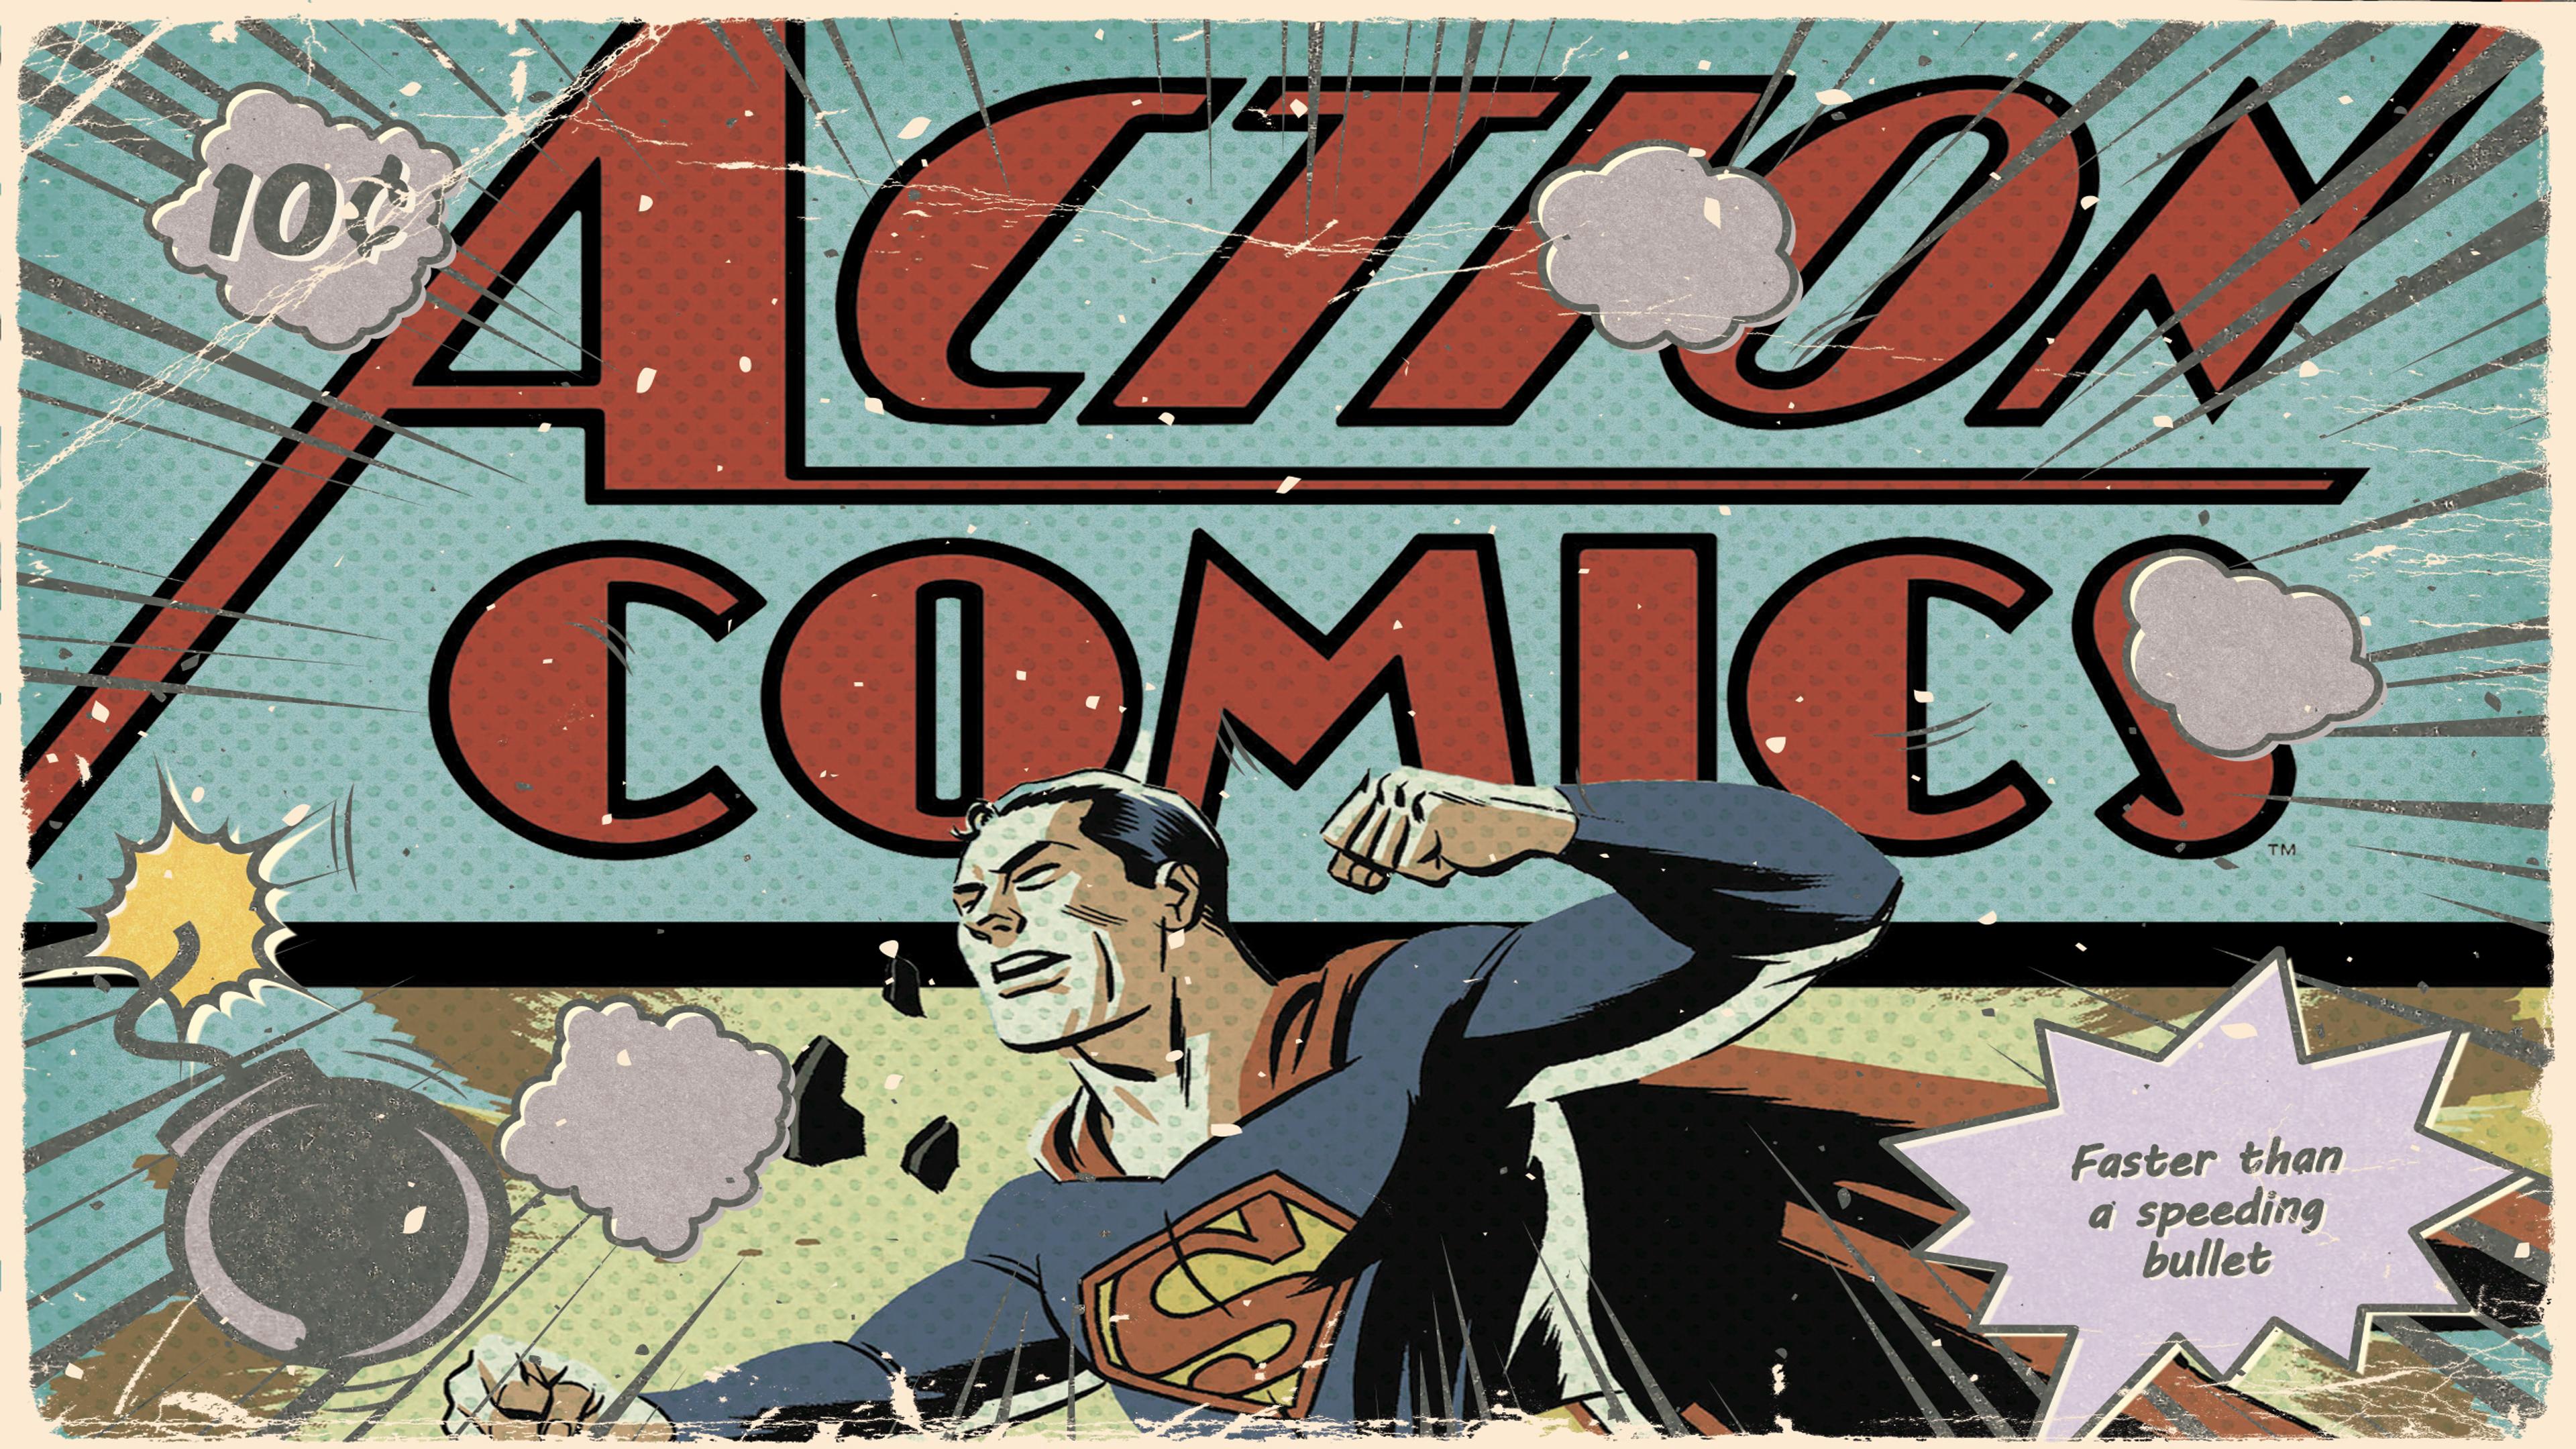 3840x2160 Vintage Comic Book Wallpaper - Action Comics Cgc on WallpaperBat.